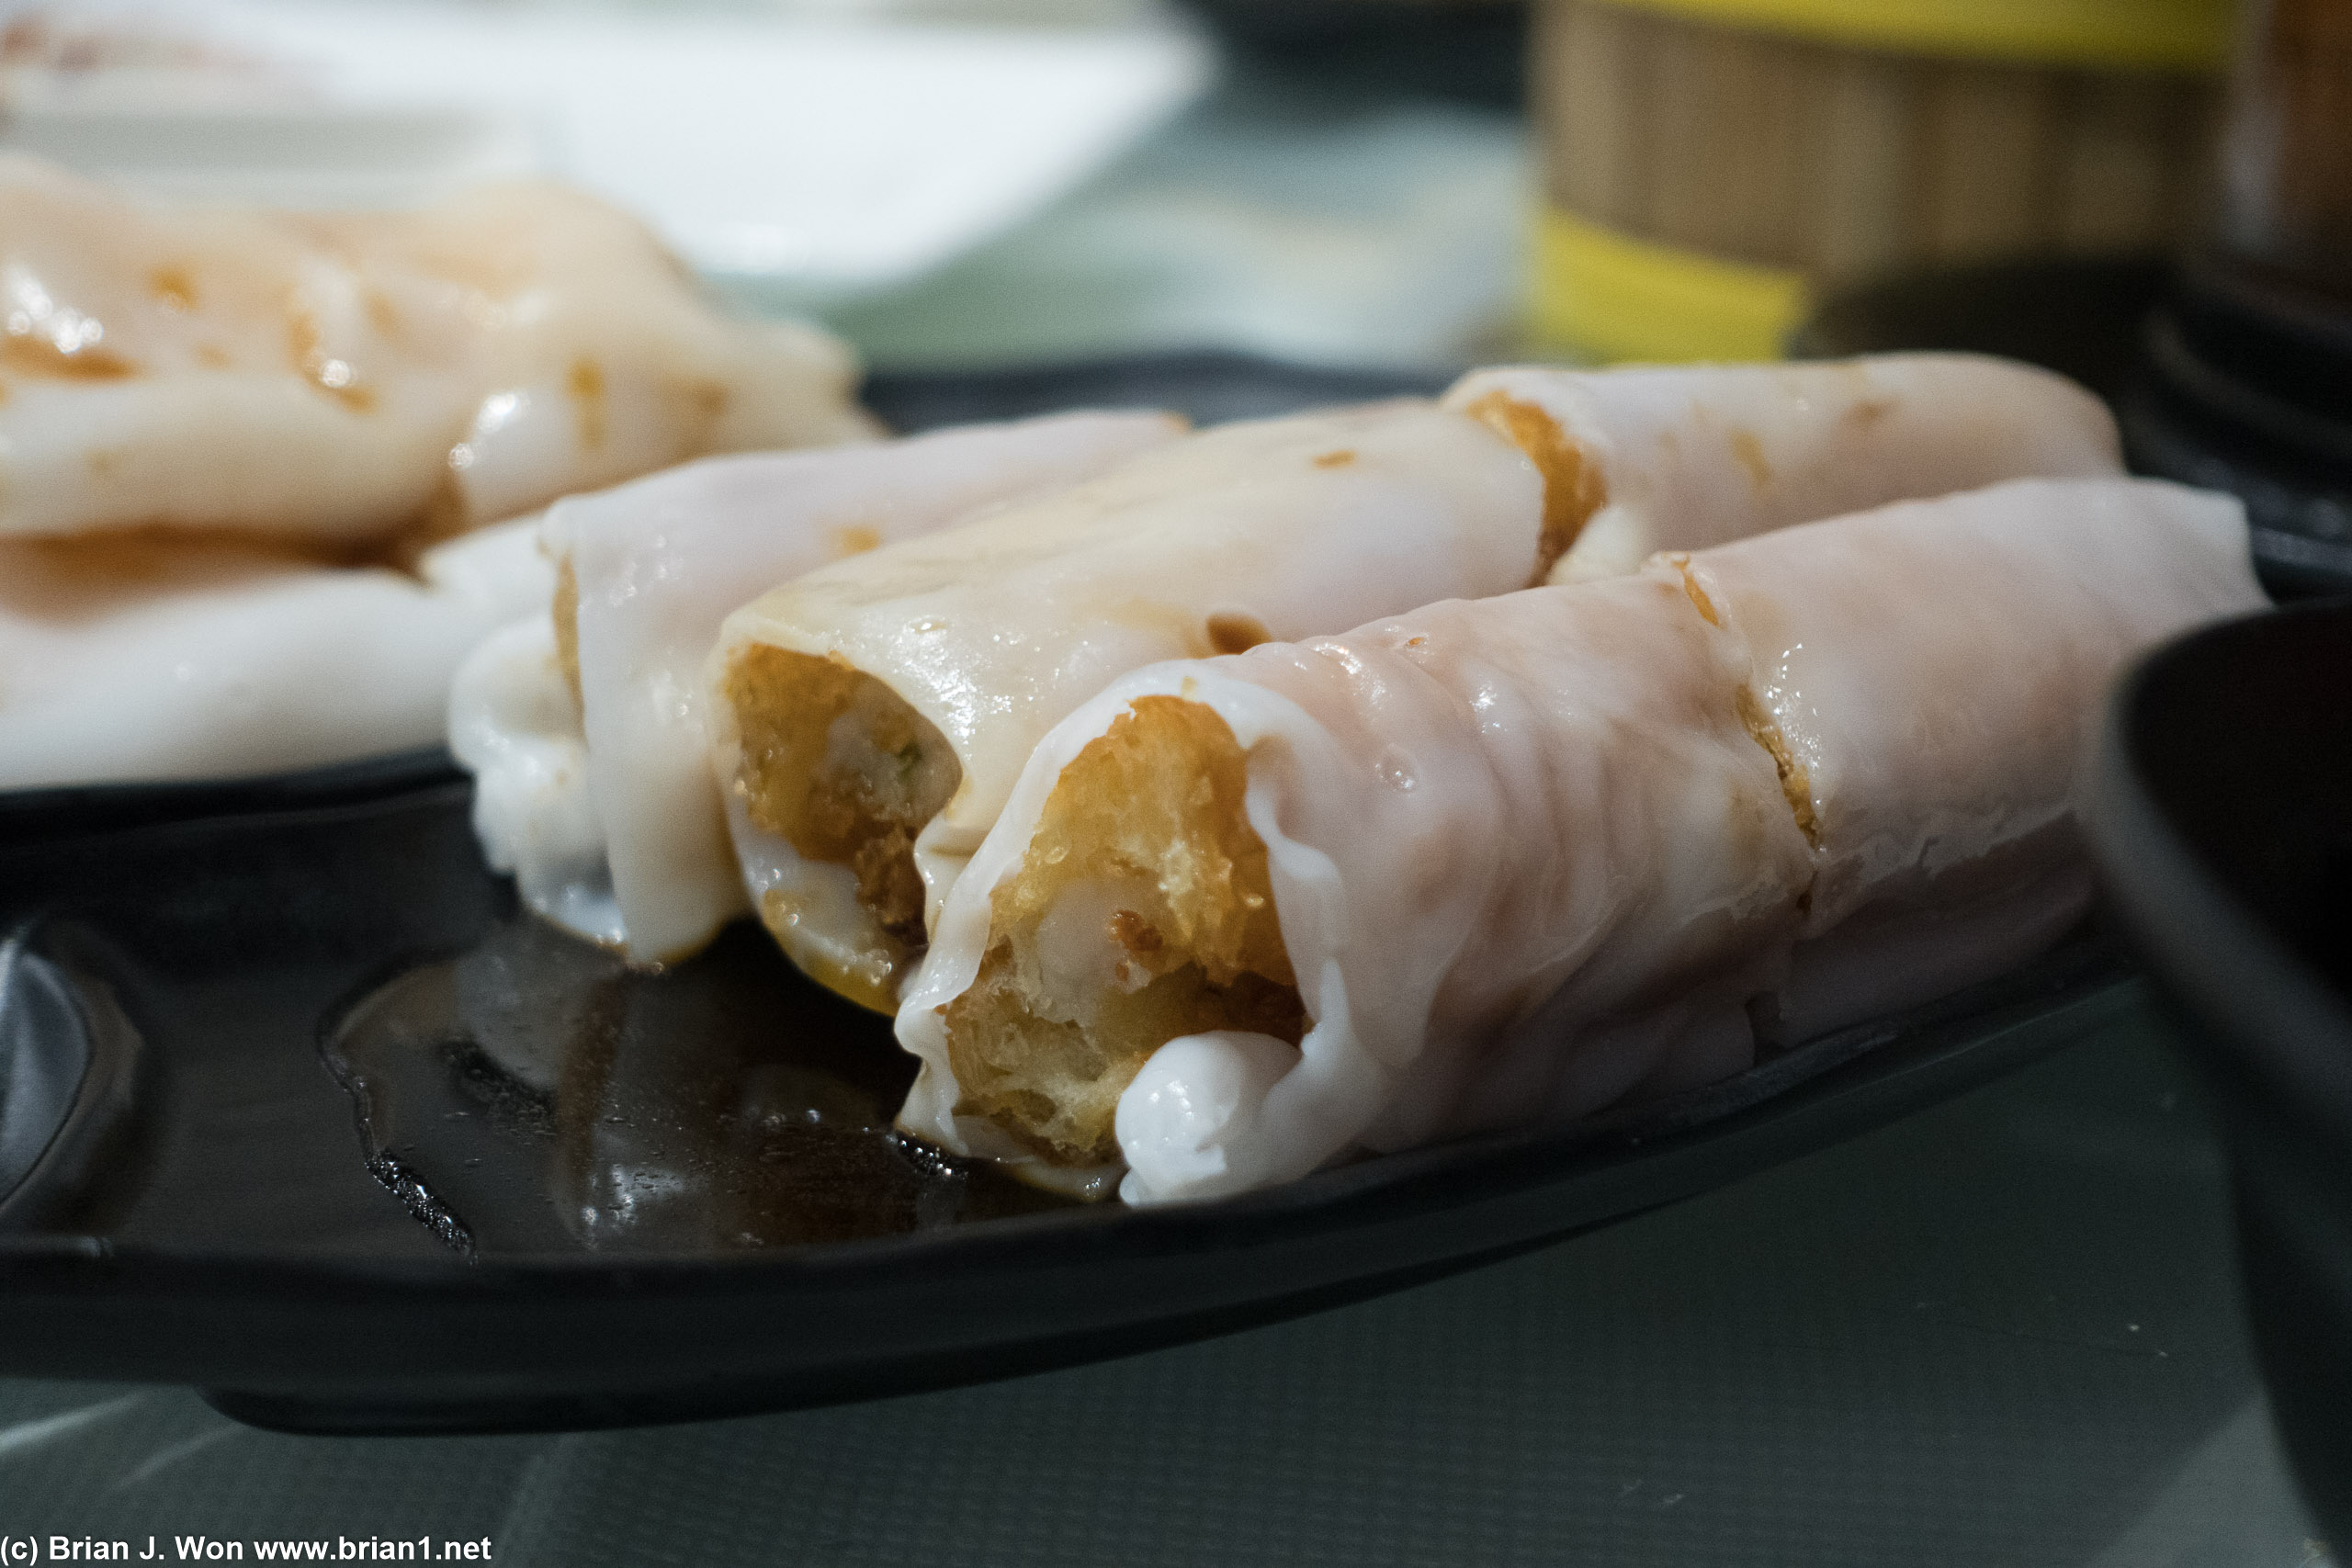 Deep fried shrimp/yeow teow stuffed cheung fun. Some like it. I am not a fan.